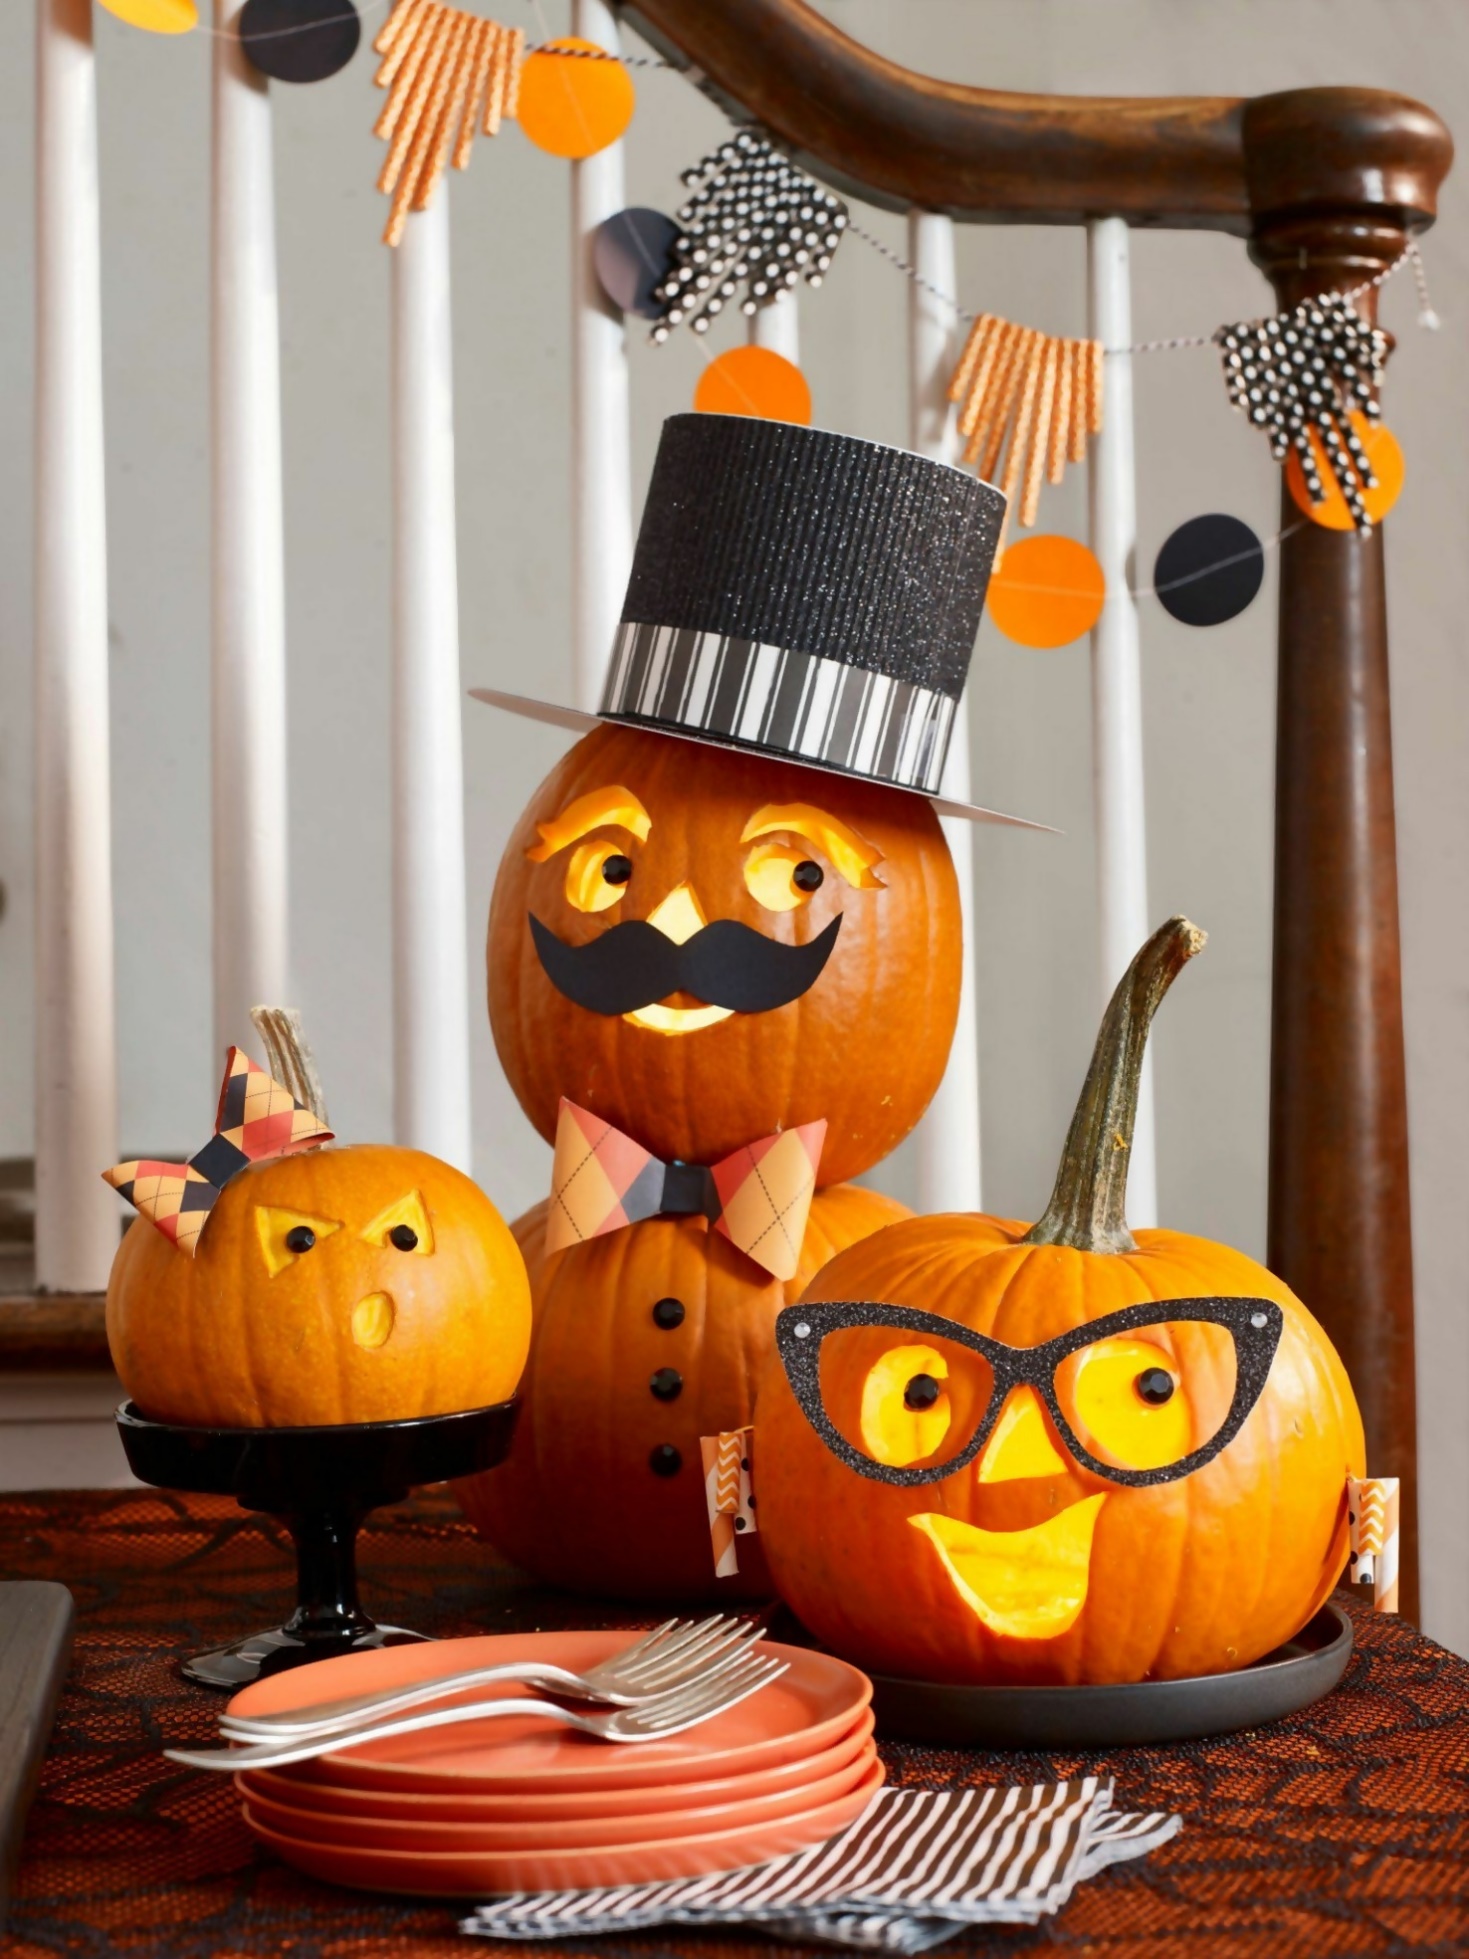 Spooky Halloween Decorating Ideas - Interior Design Explained